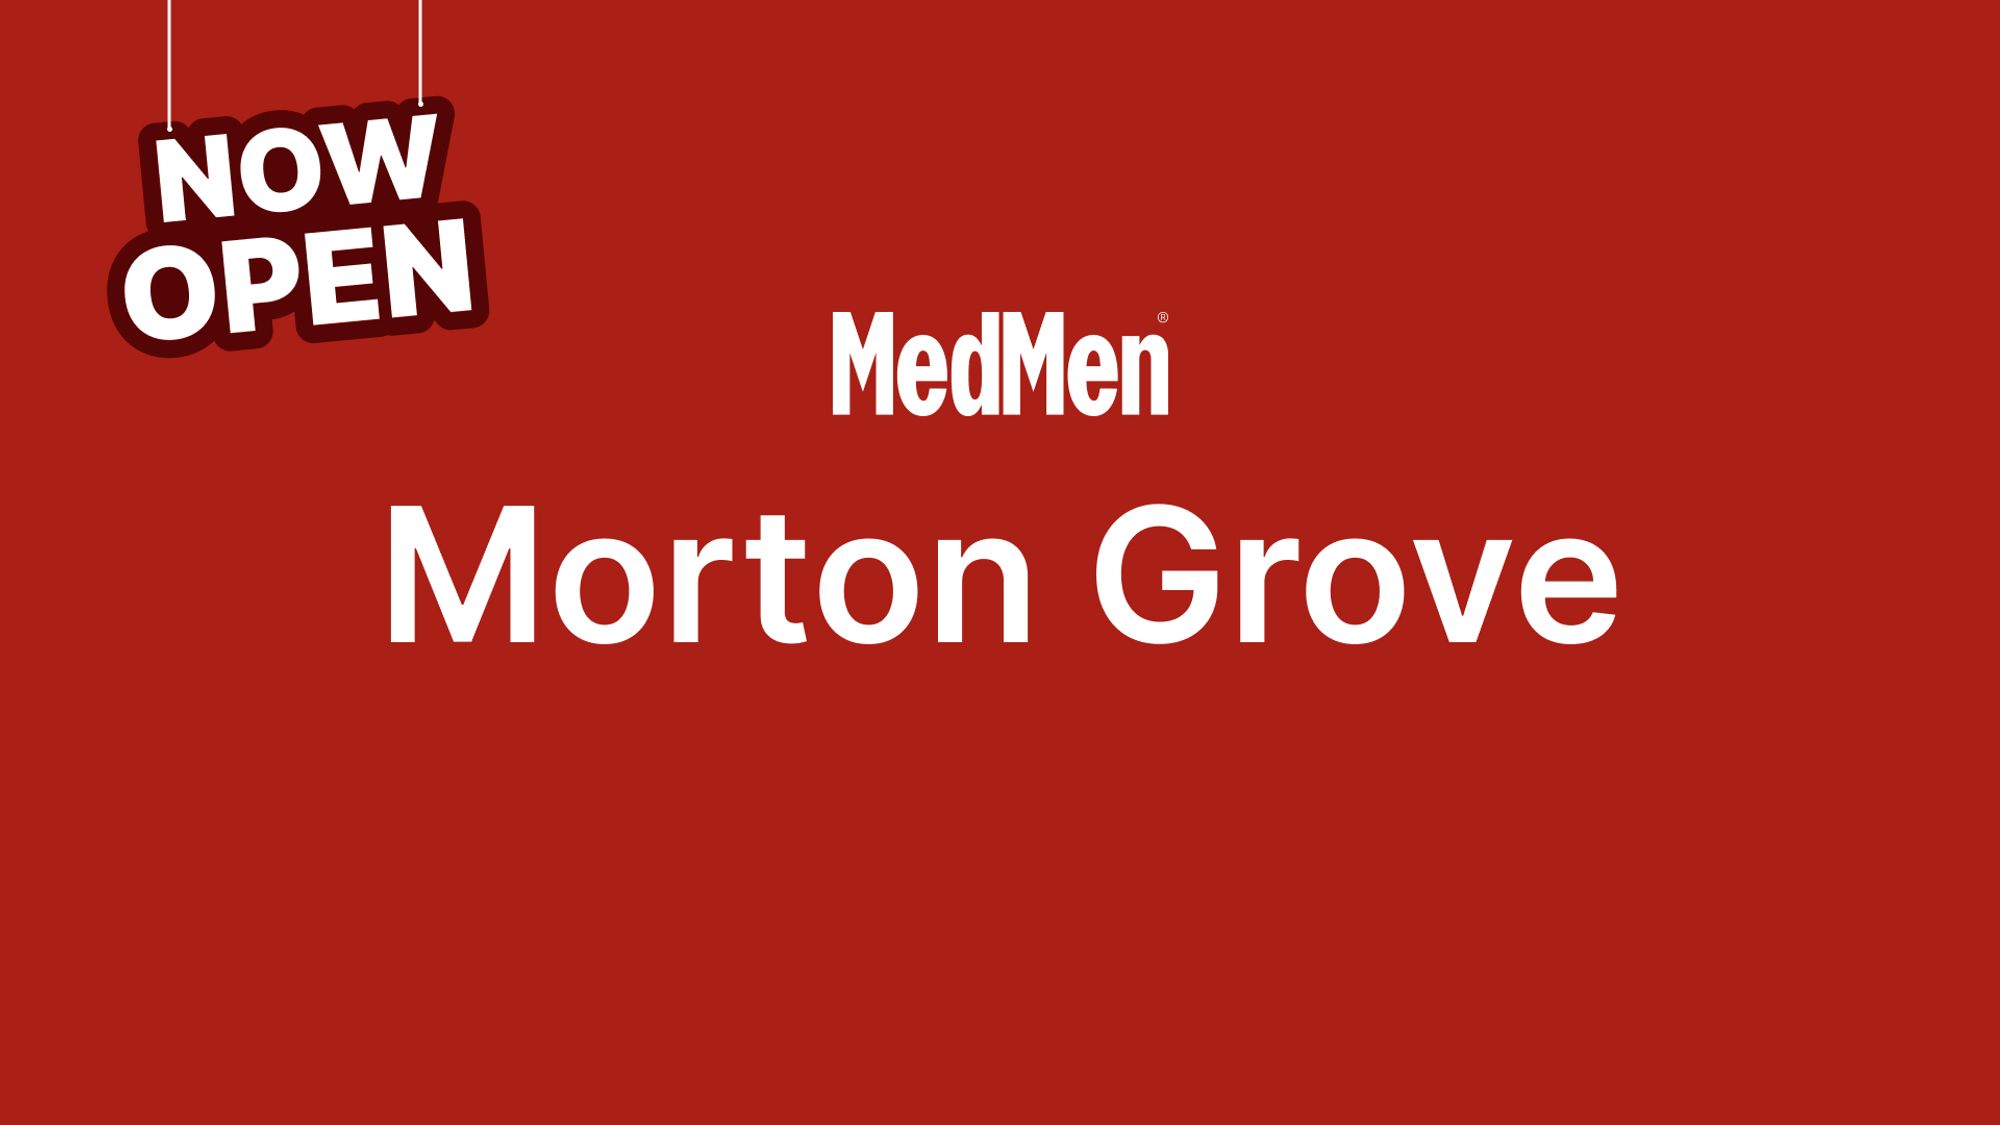 MedMen Morton Grove Morton Grove, IL Dispensary Leafly